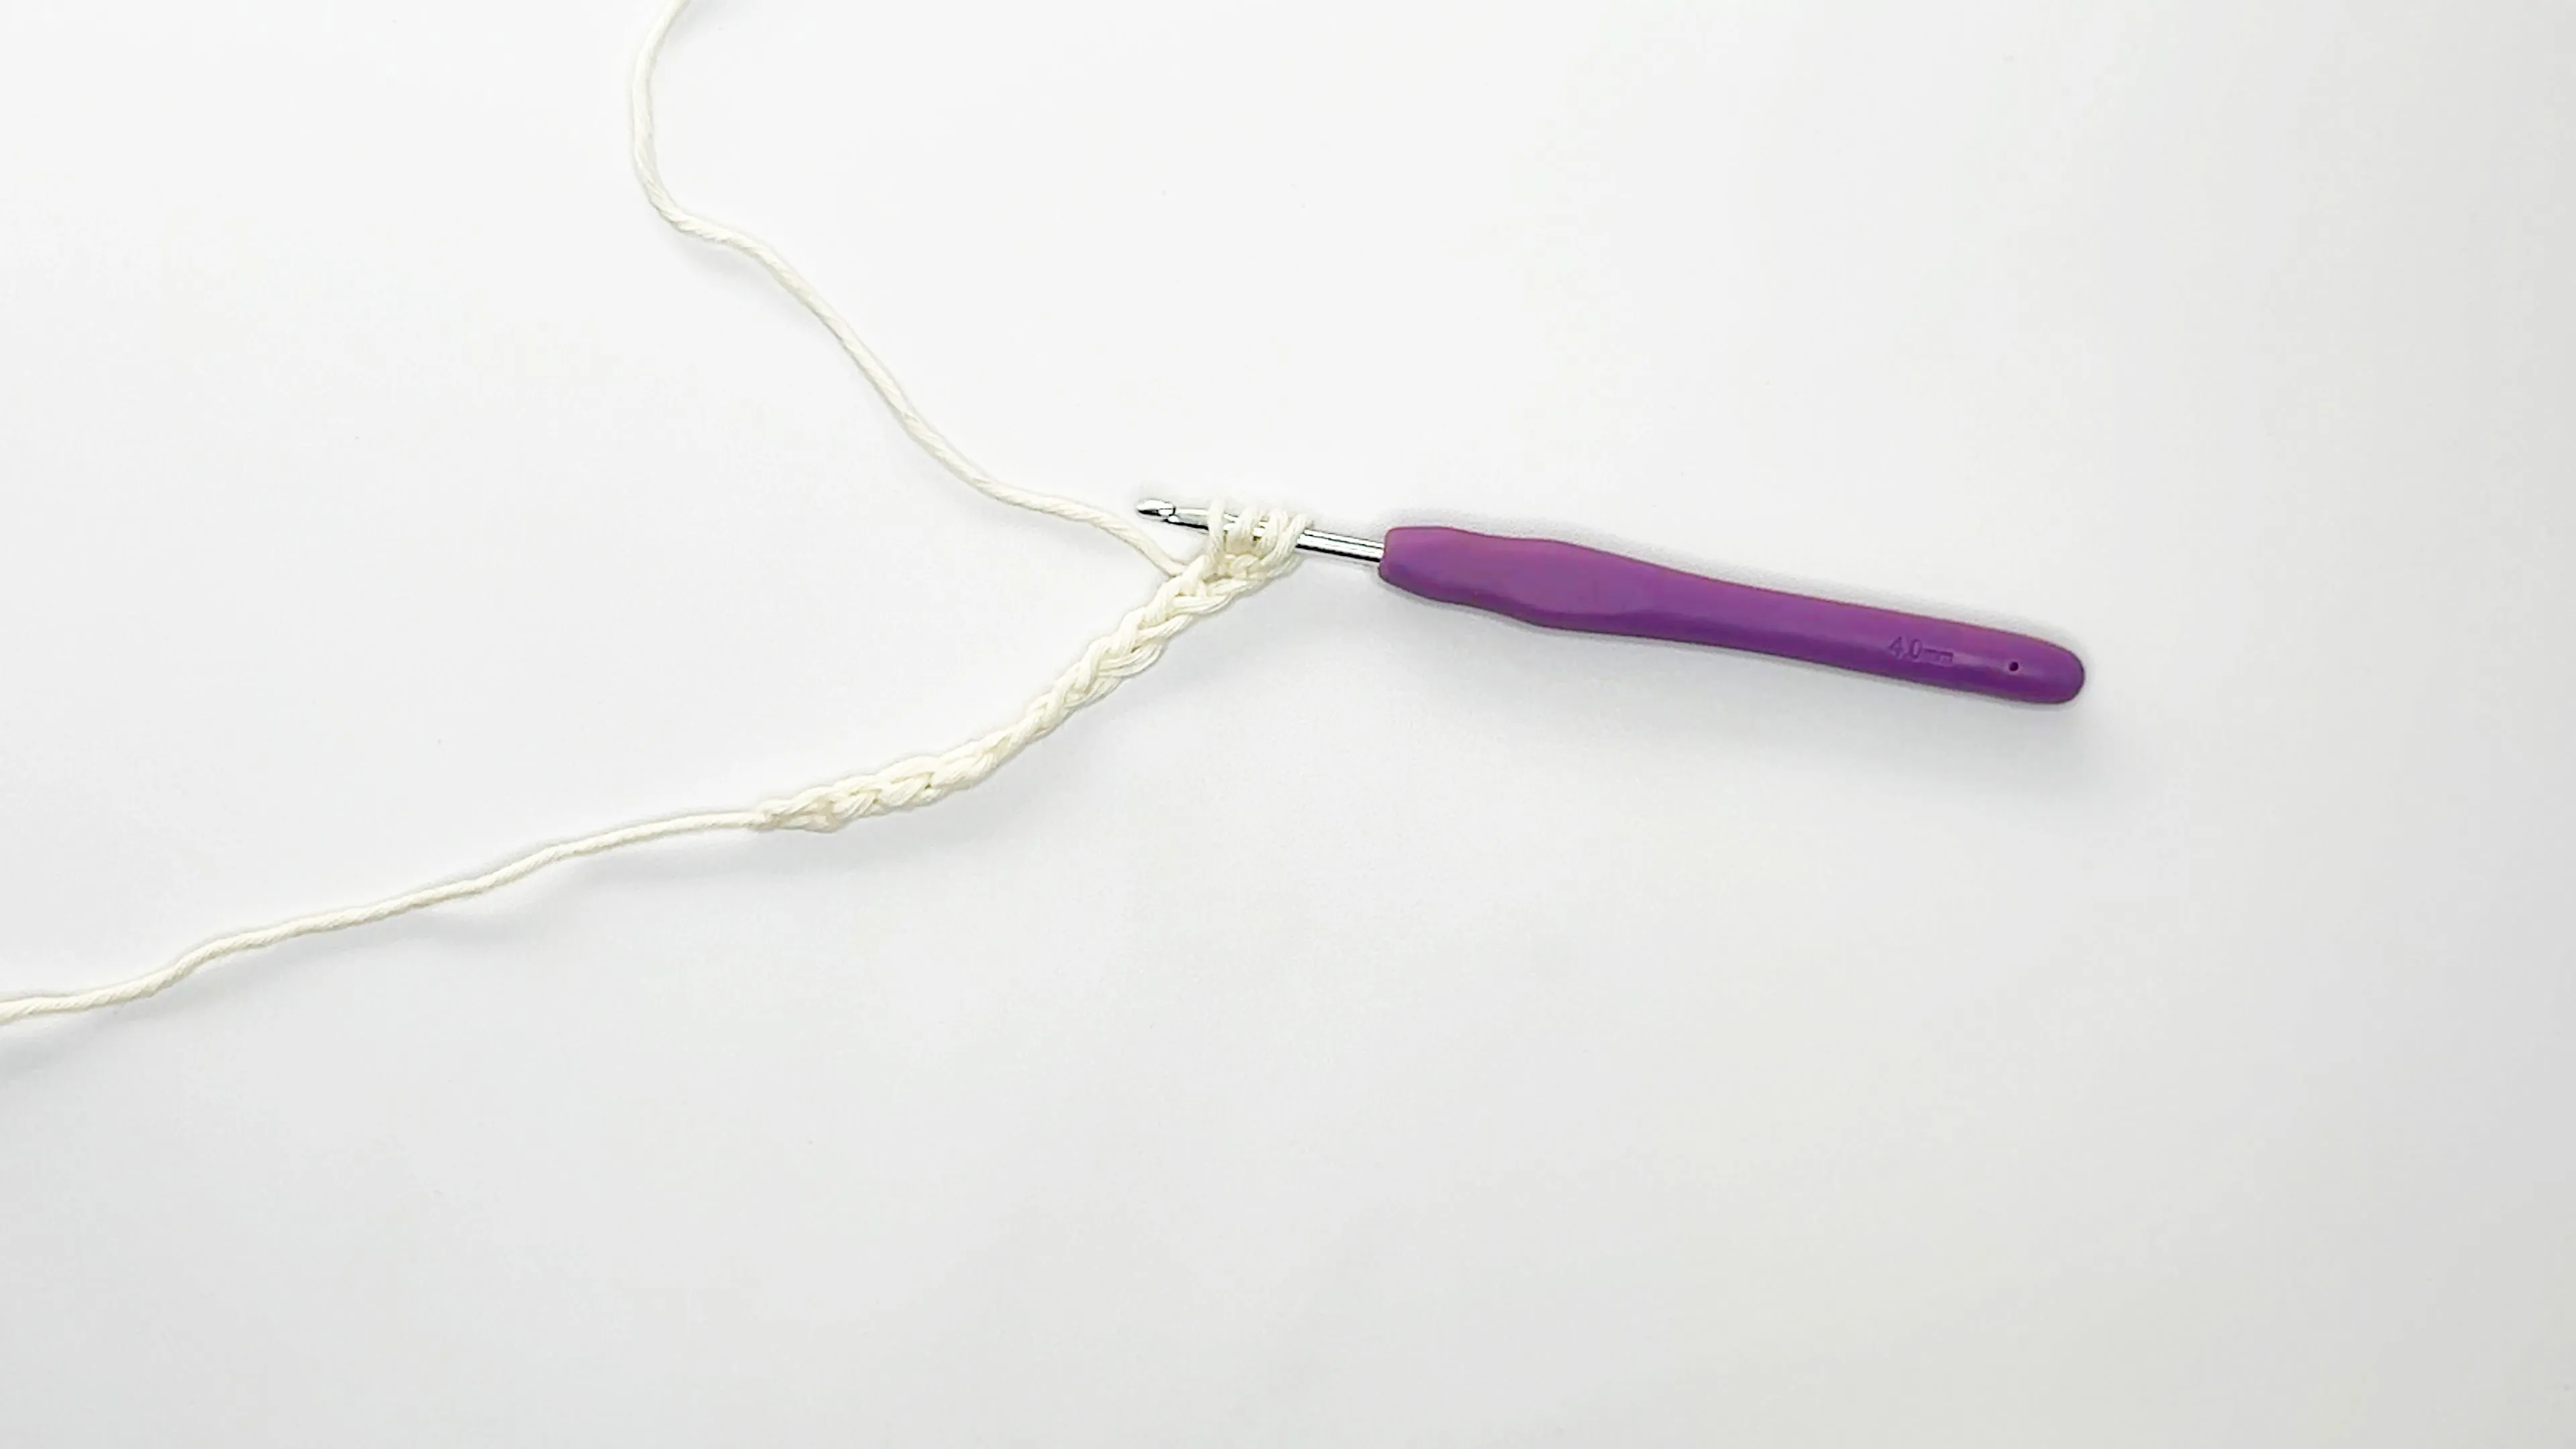 purple crochet hook and white yarn